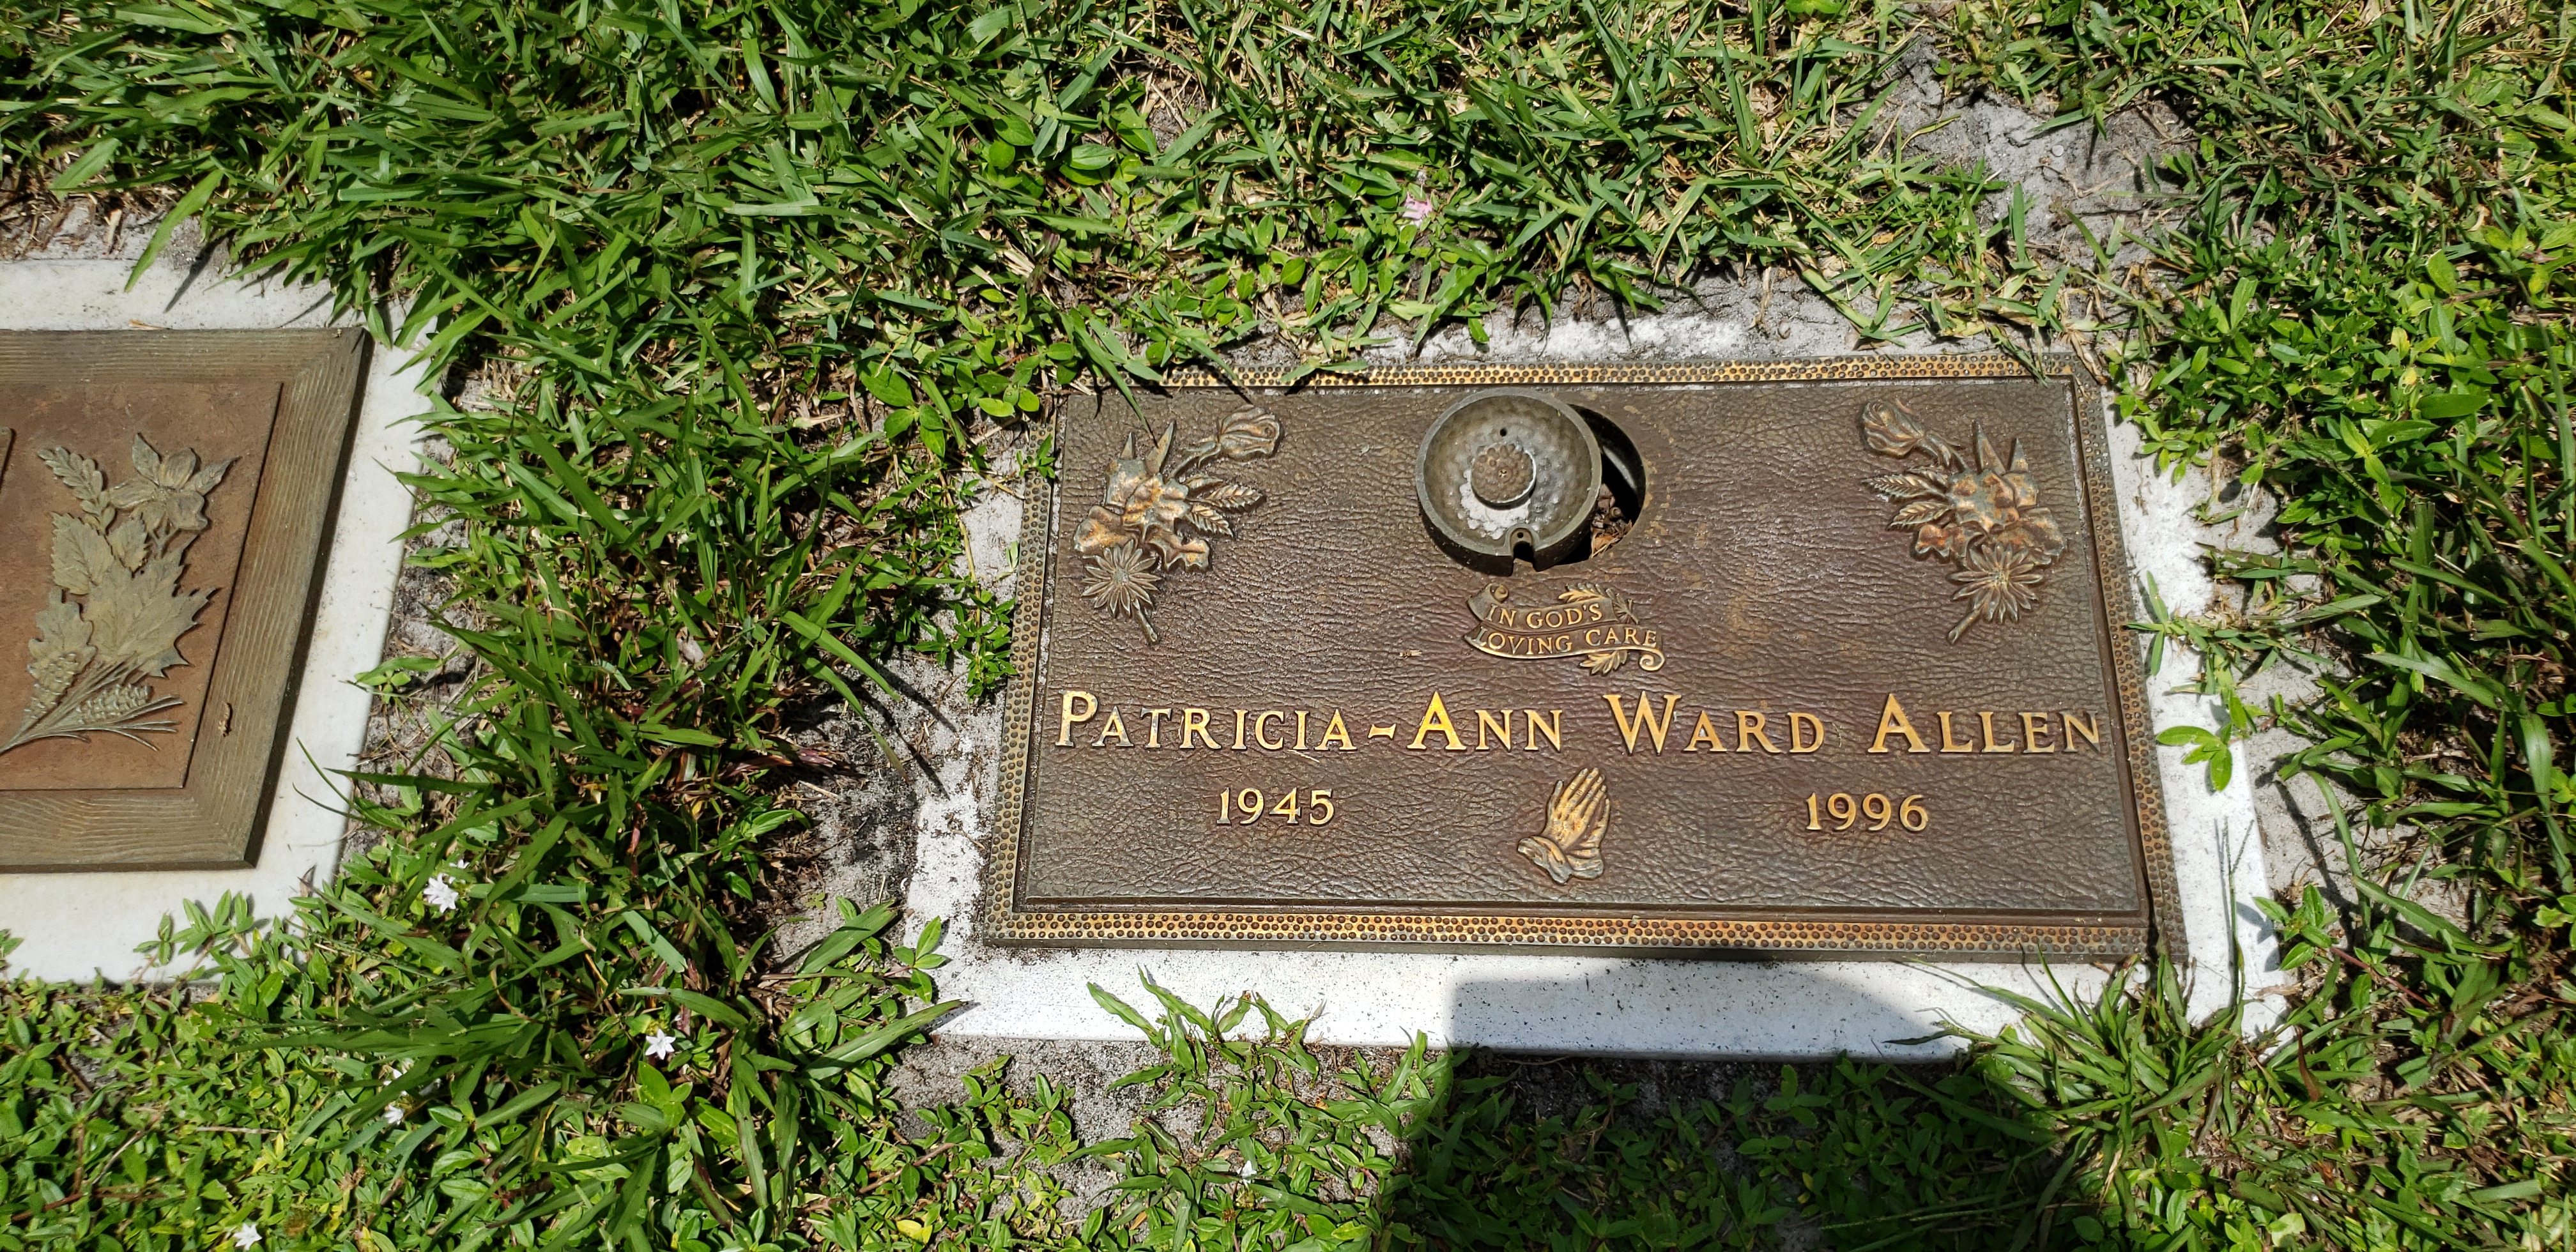 Patricia-Ann Ward Allen